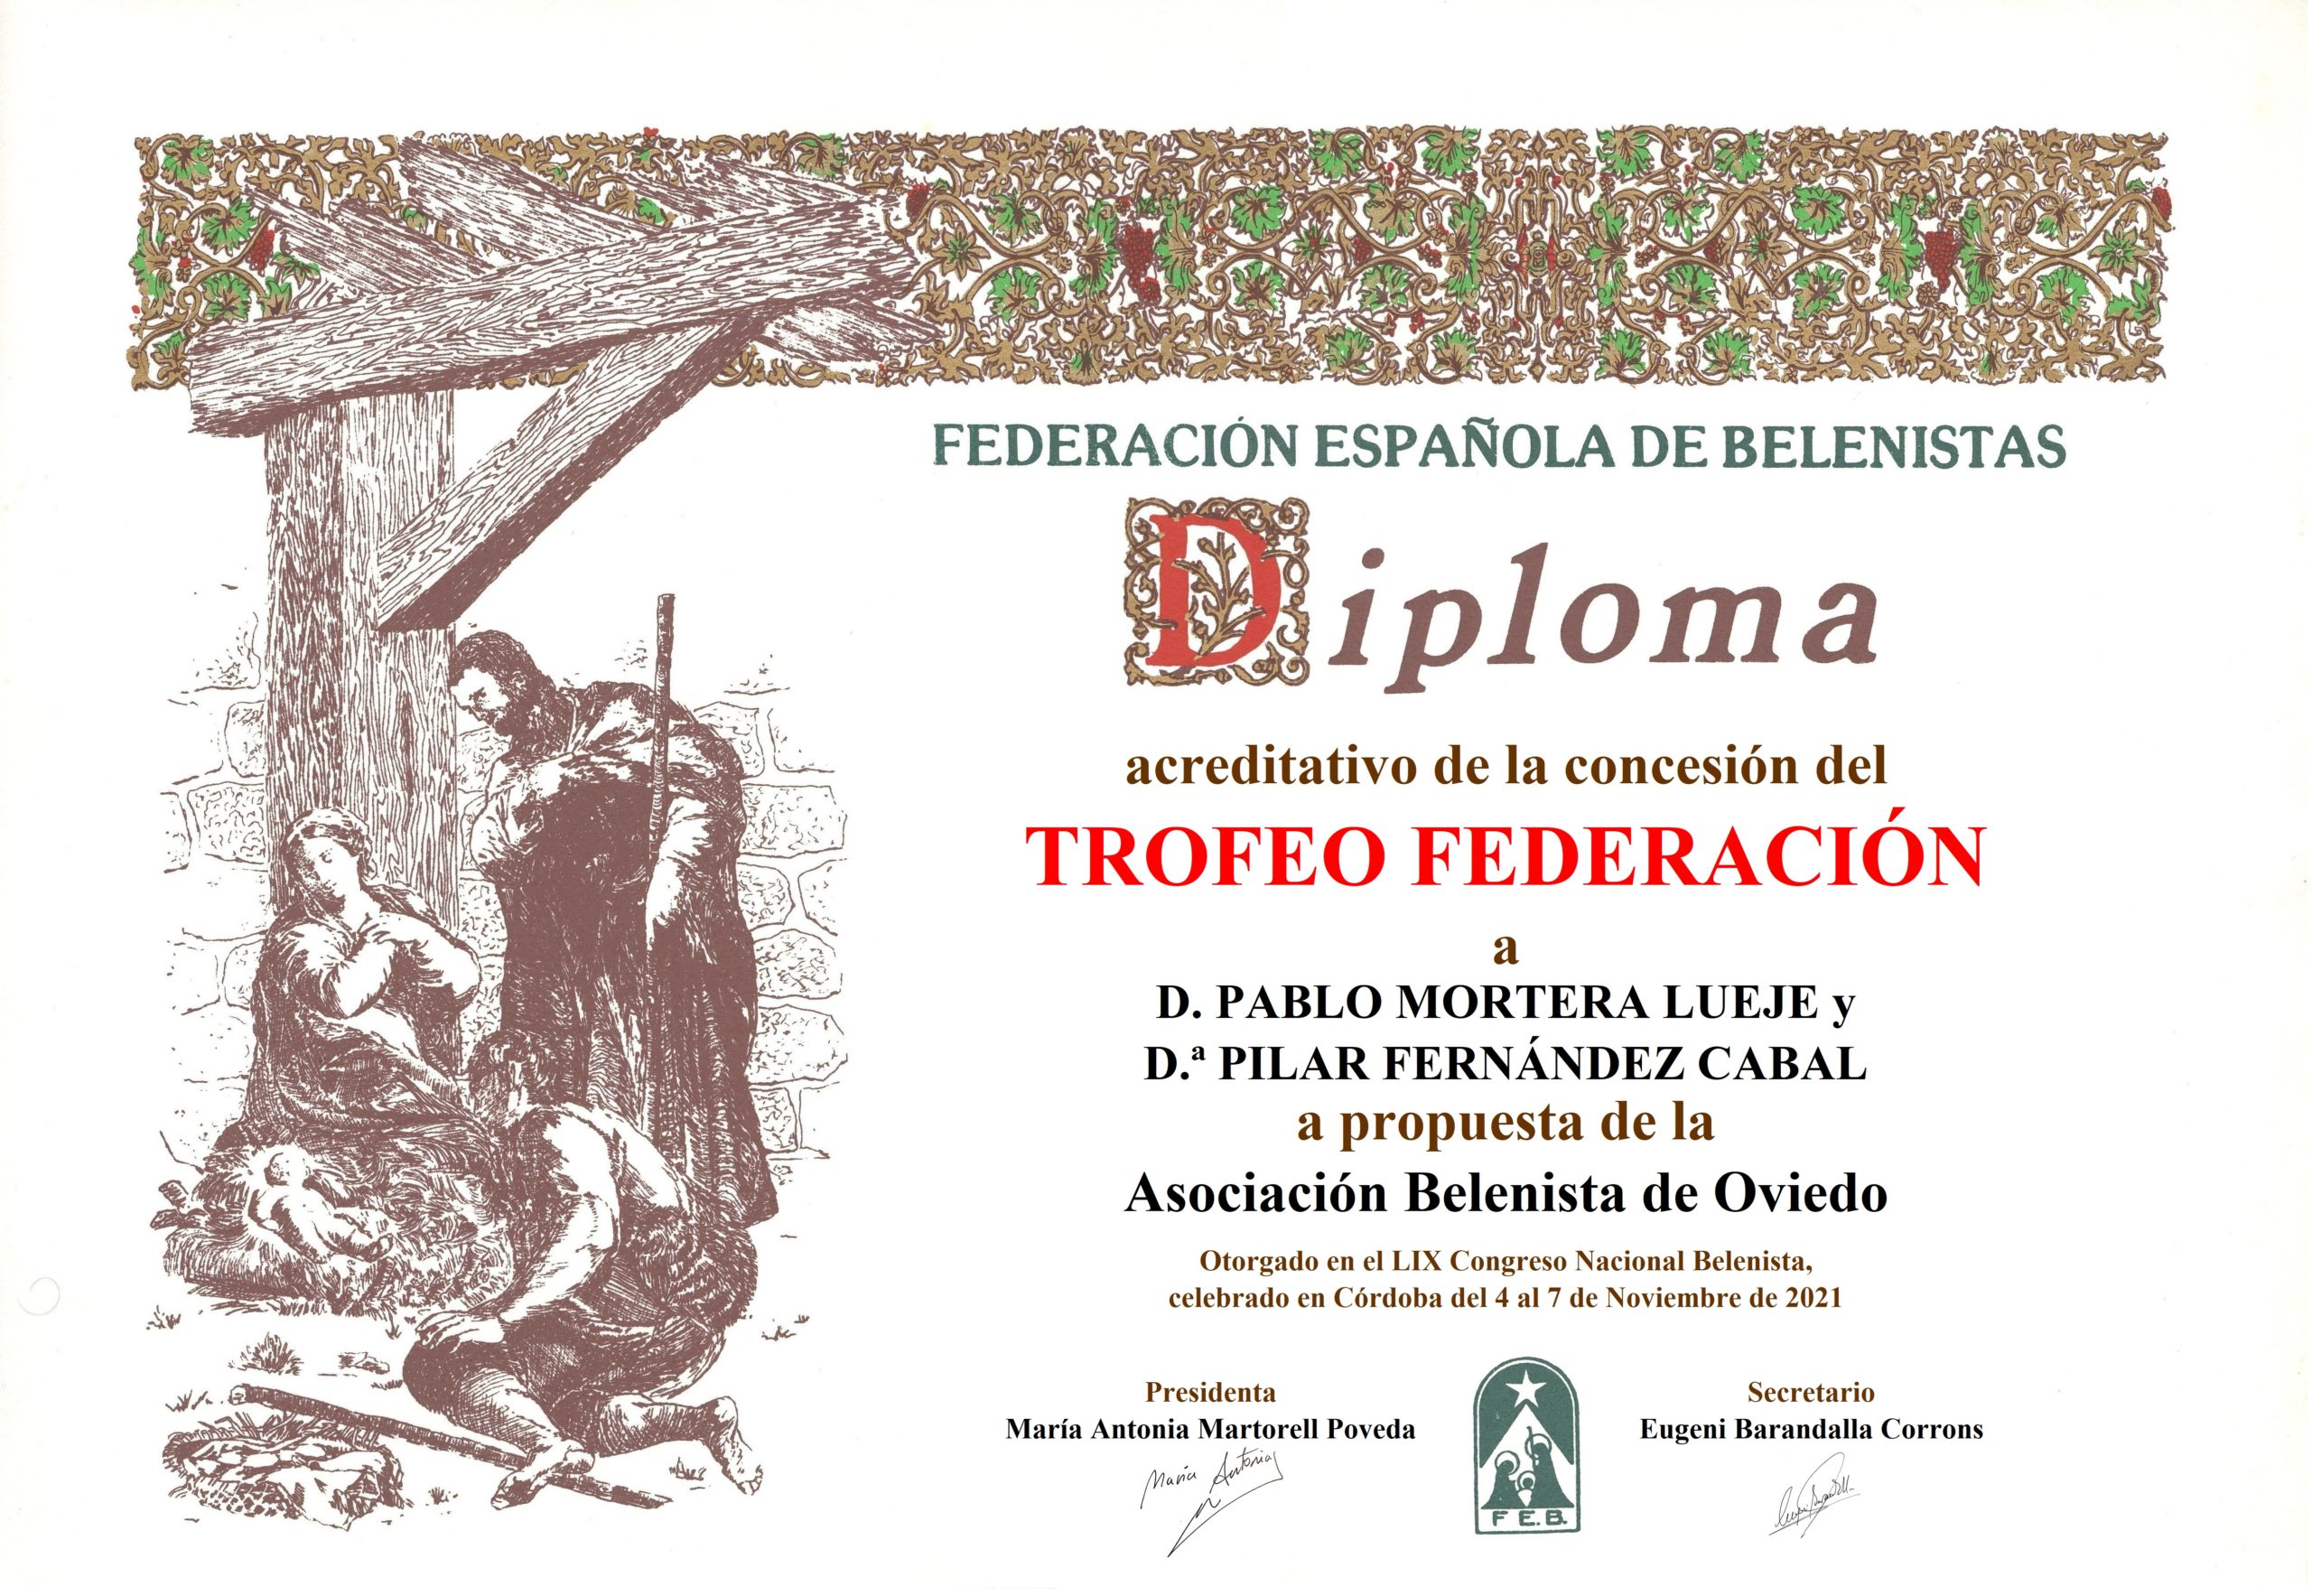 Diploma Trofeo FEB 2021 - Pablo Mortera Lueje y Pilar Fernández Cabal